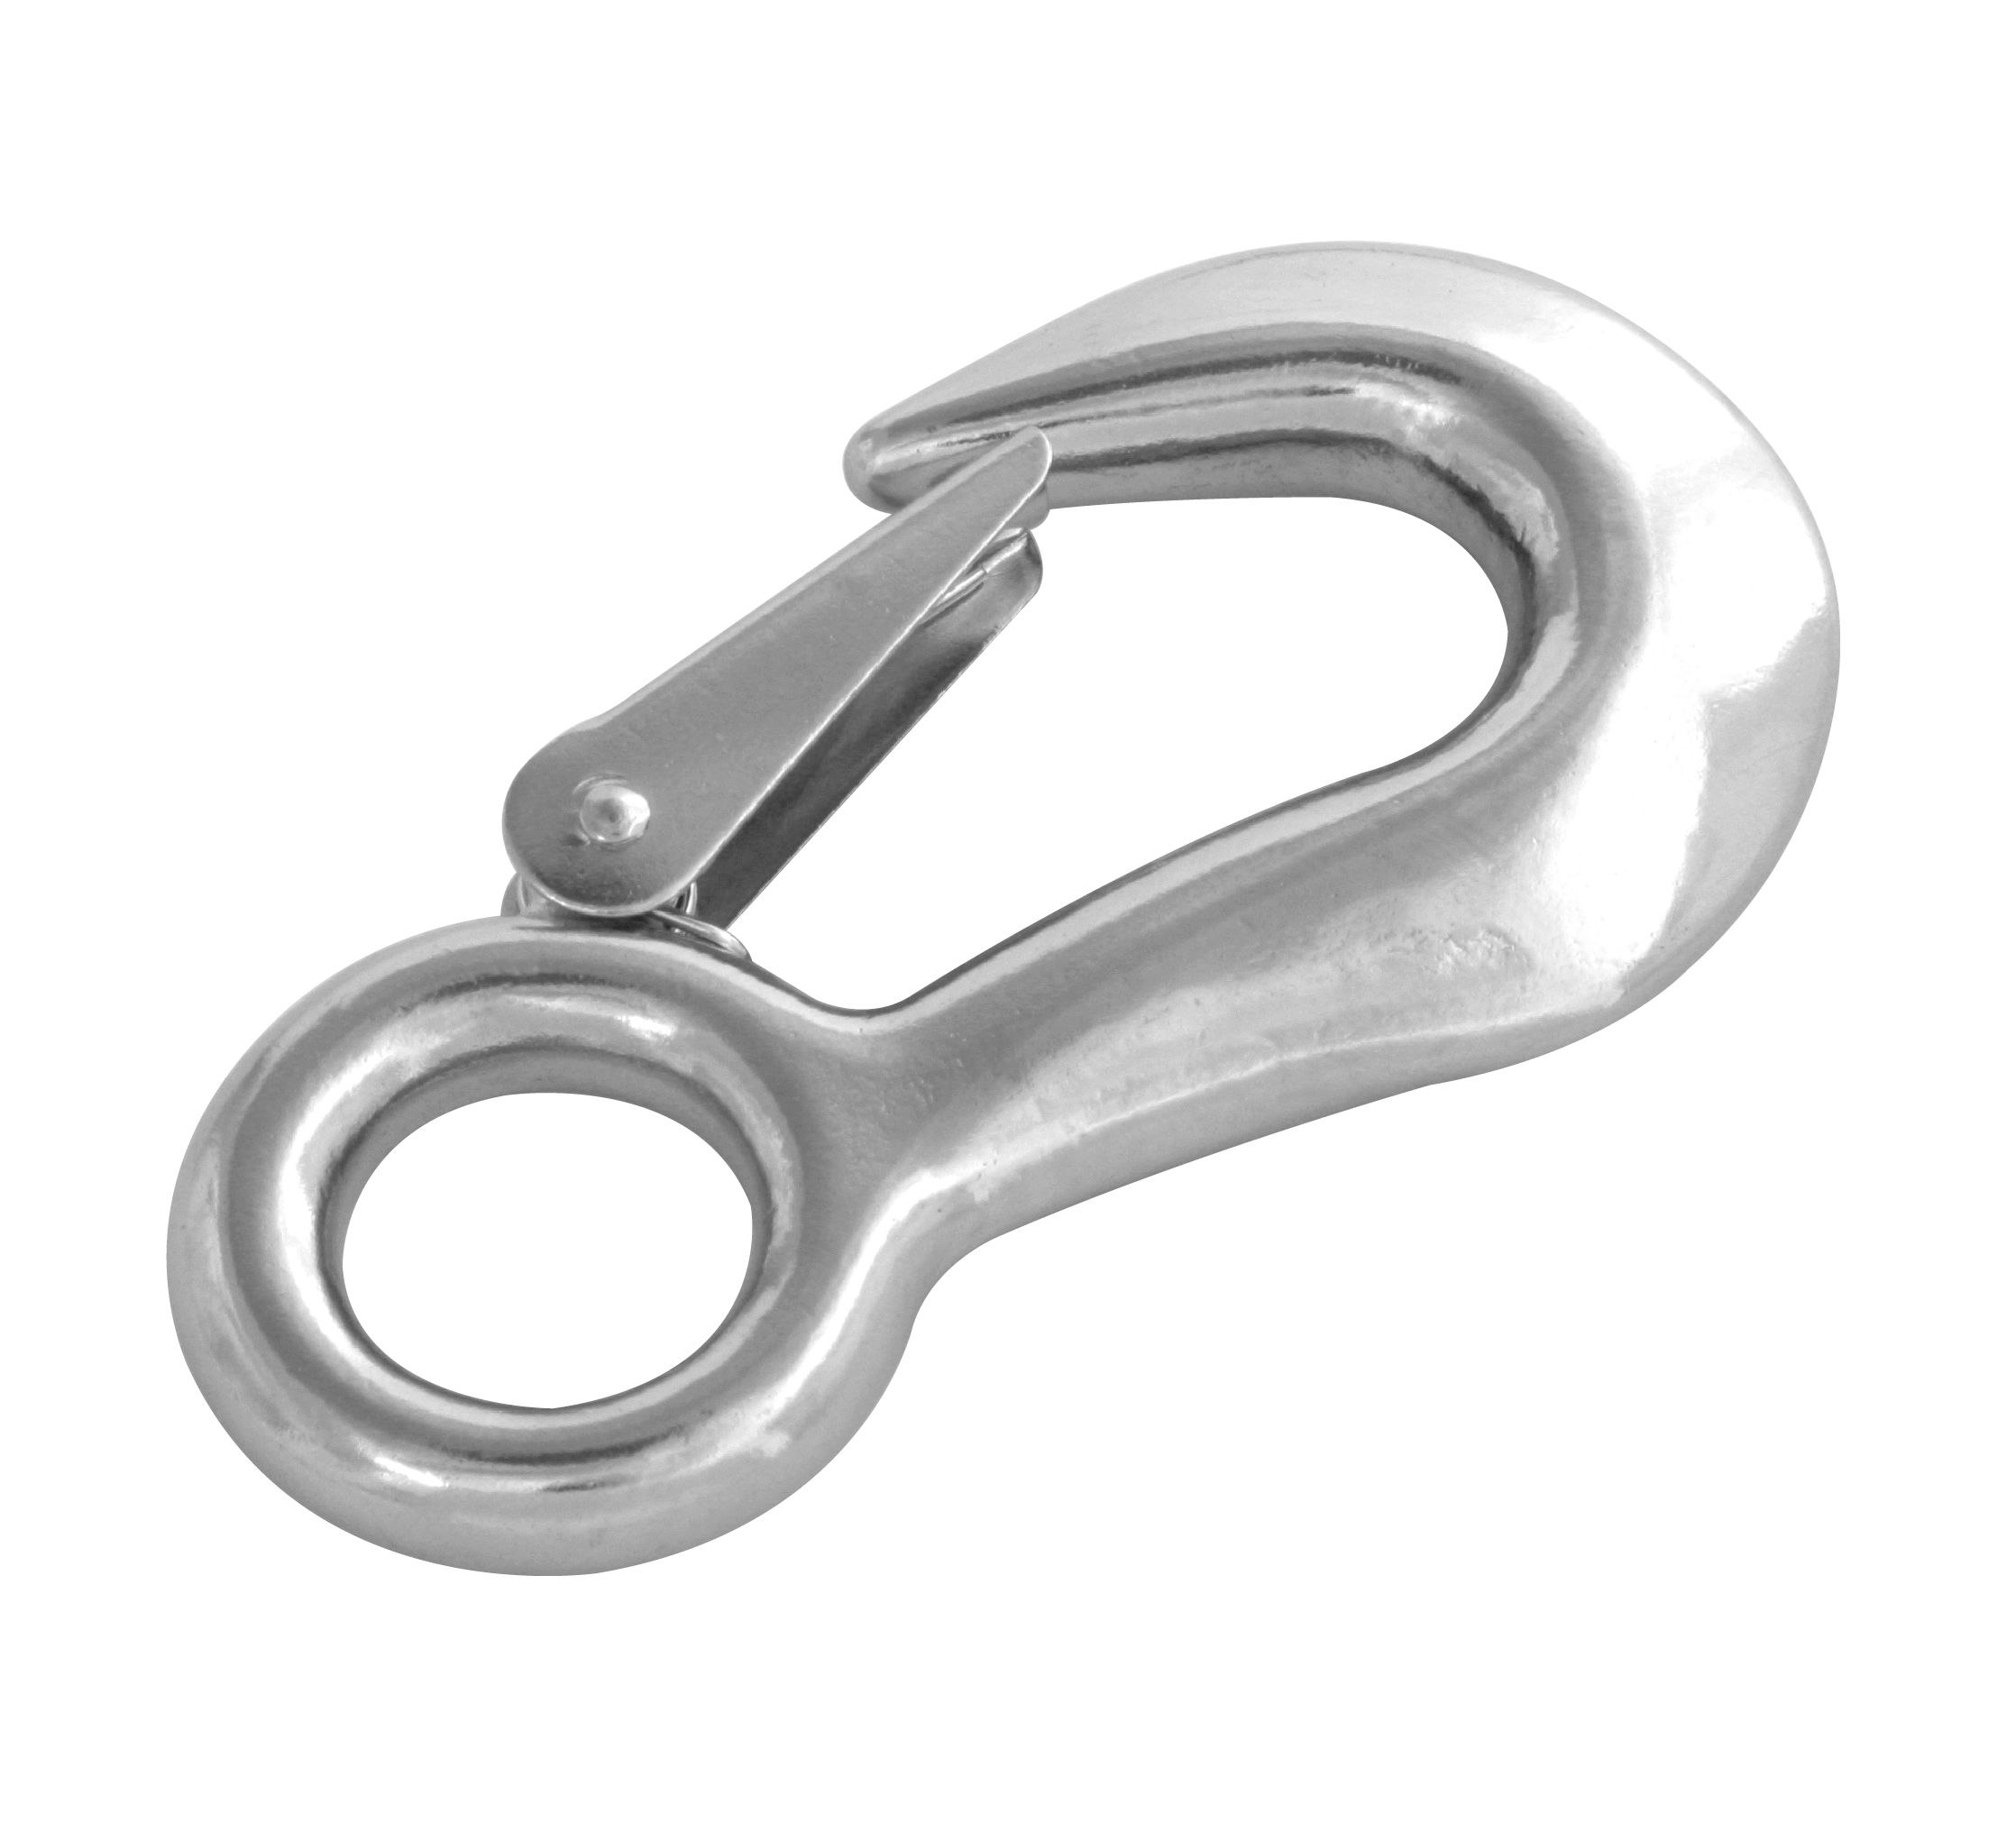 Heavy safety snap hook (with safety latch)